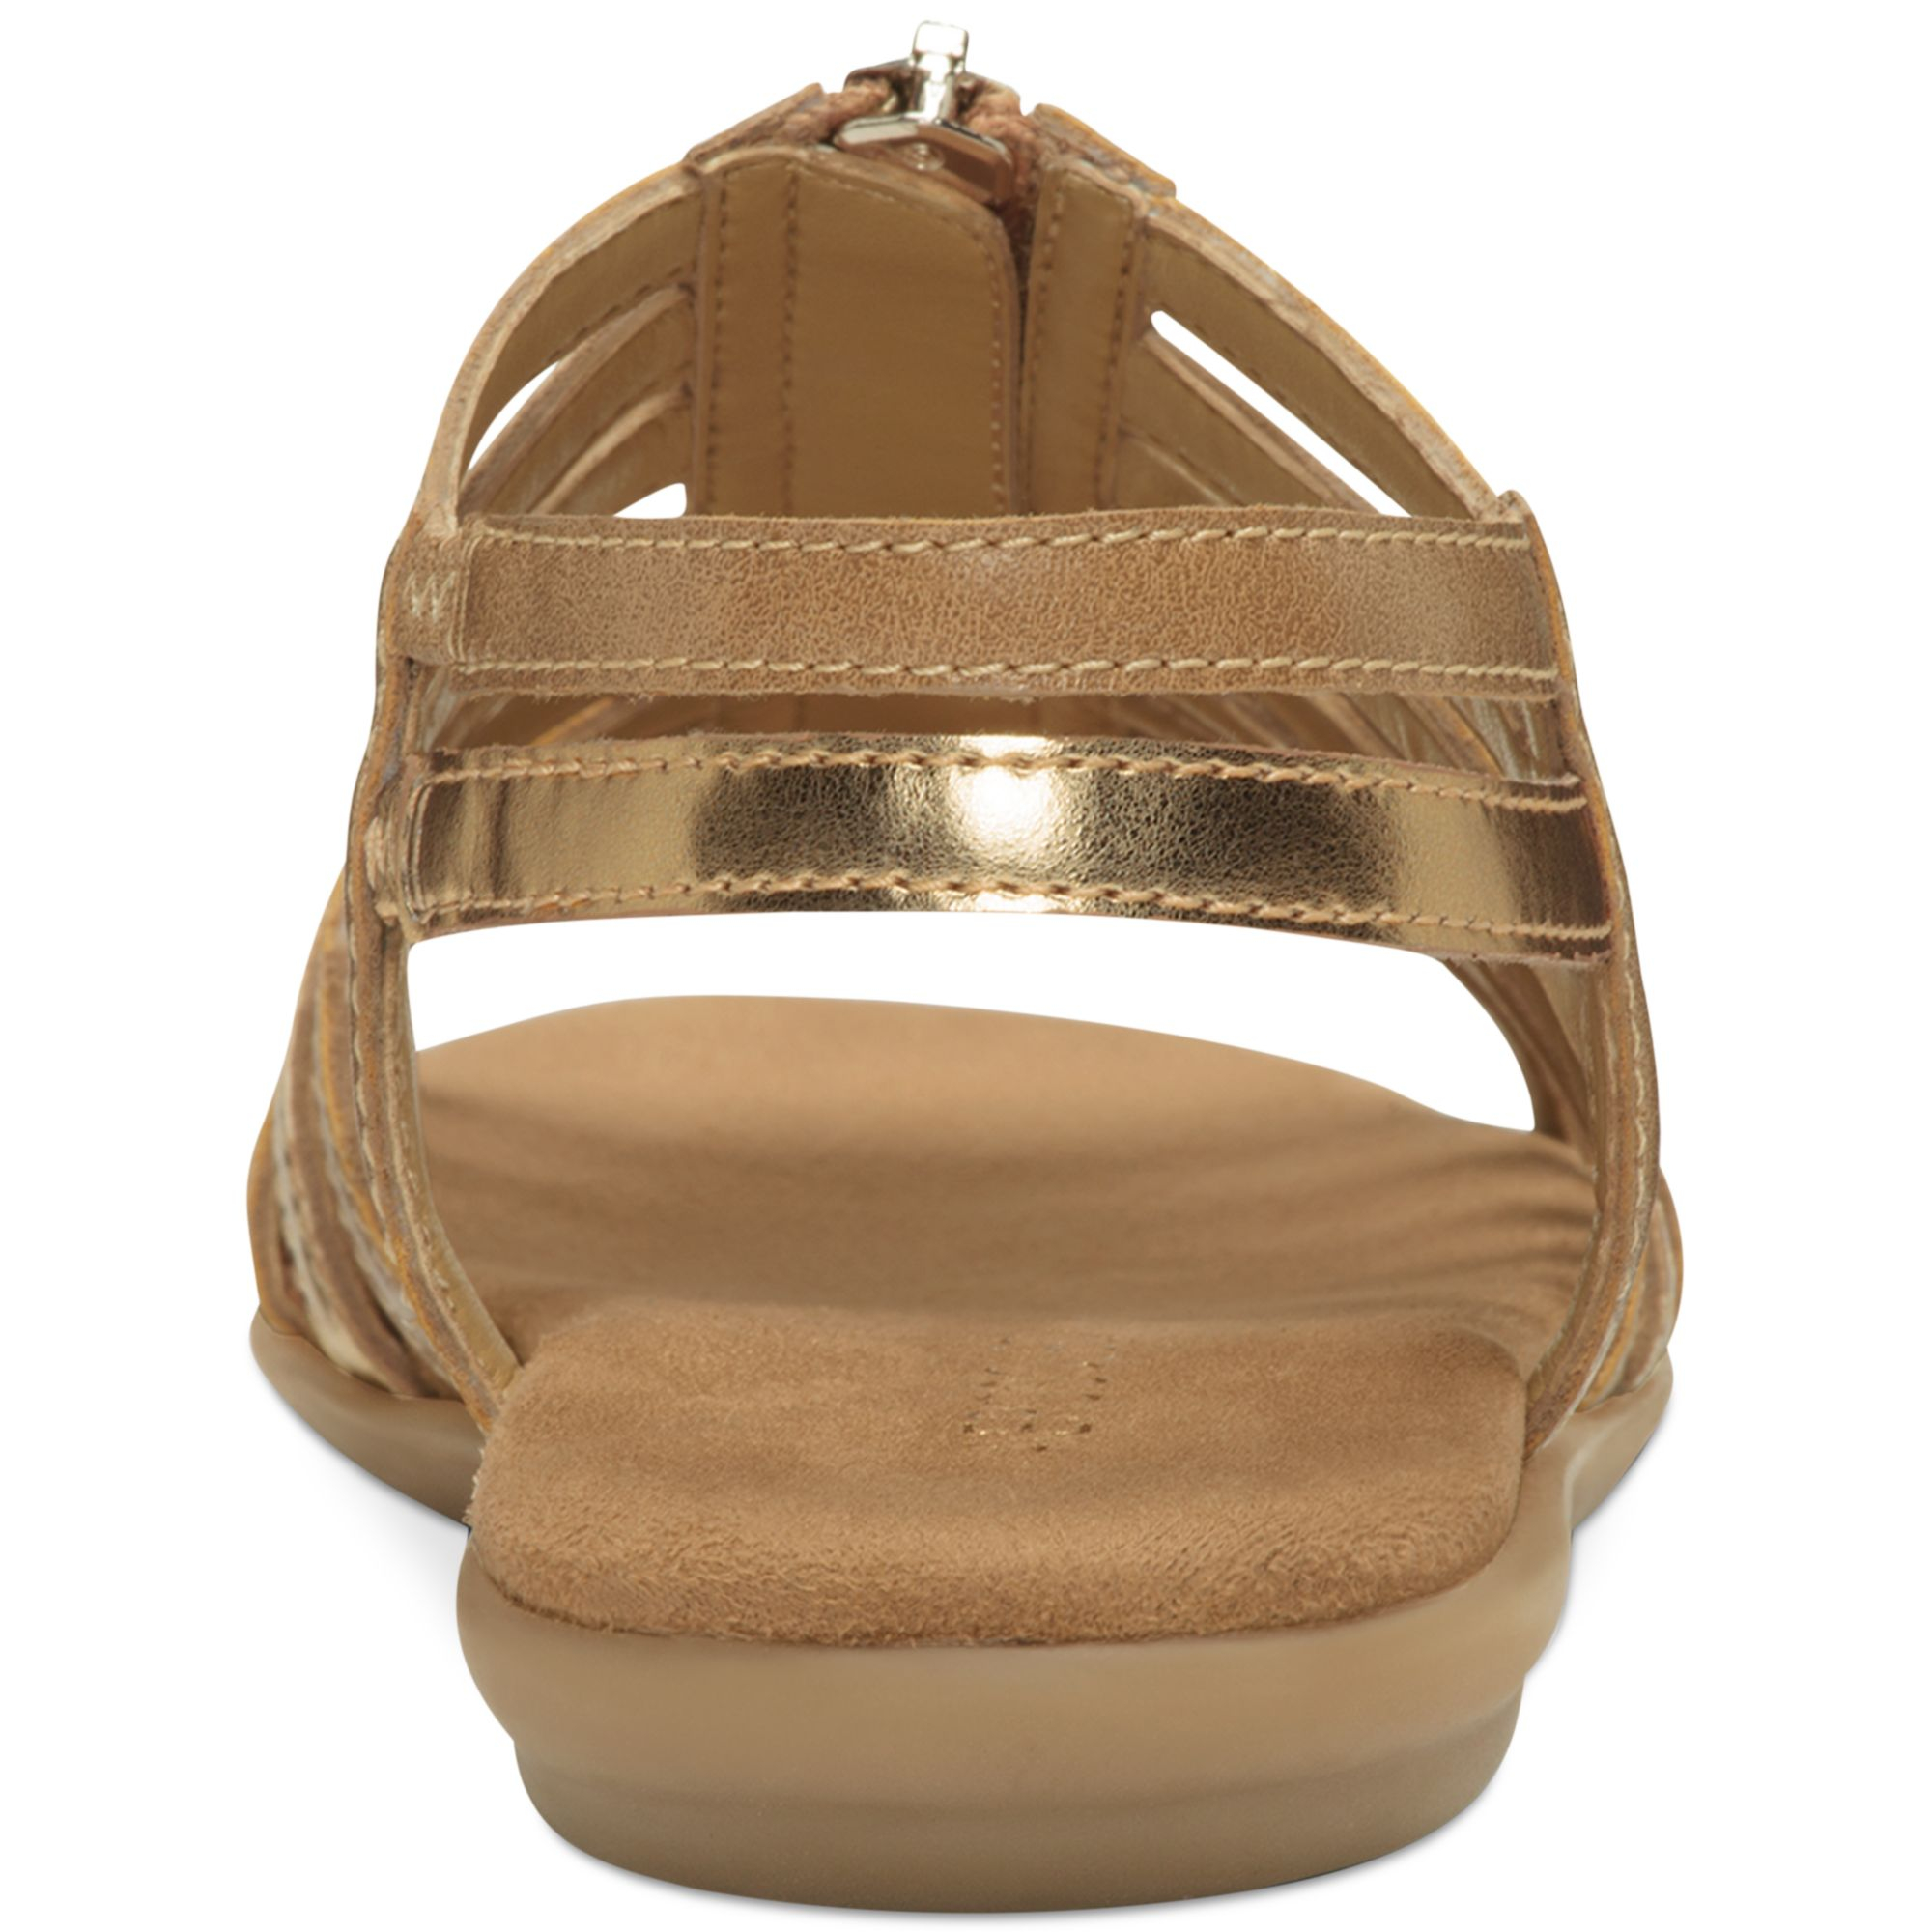 Aerosoles Chlothesline Flat Sandals in Tan/Gold (Brown) - Lyst